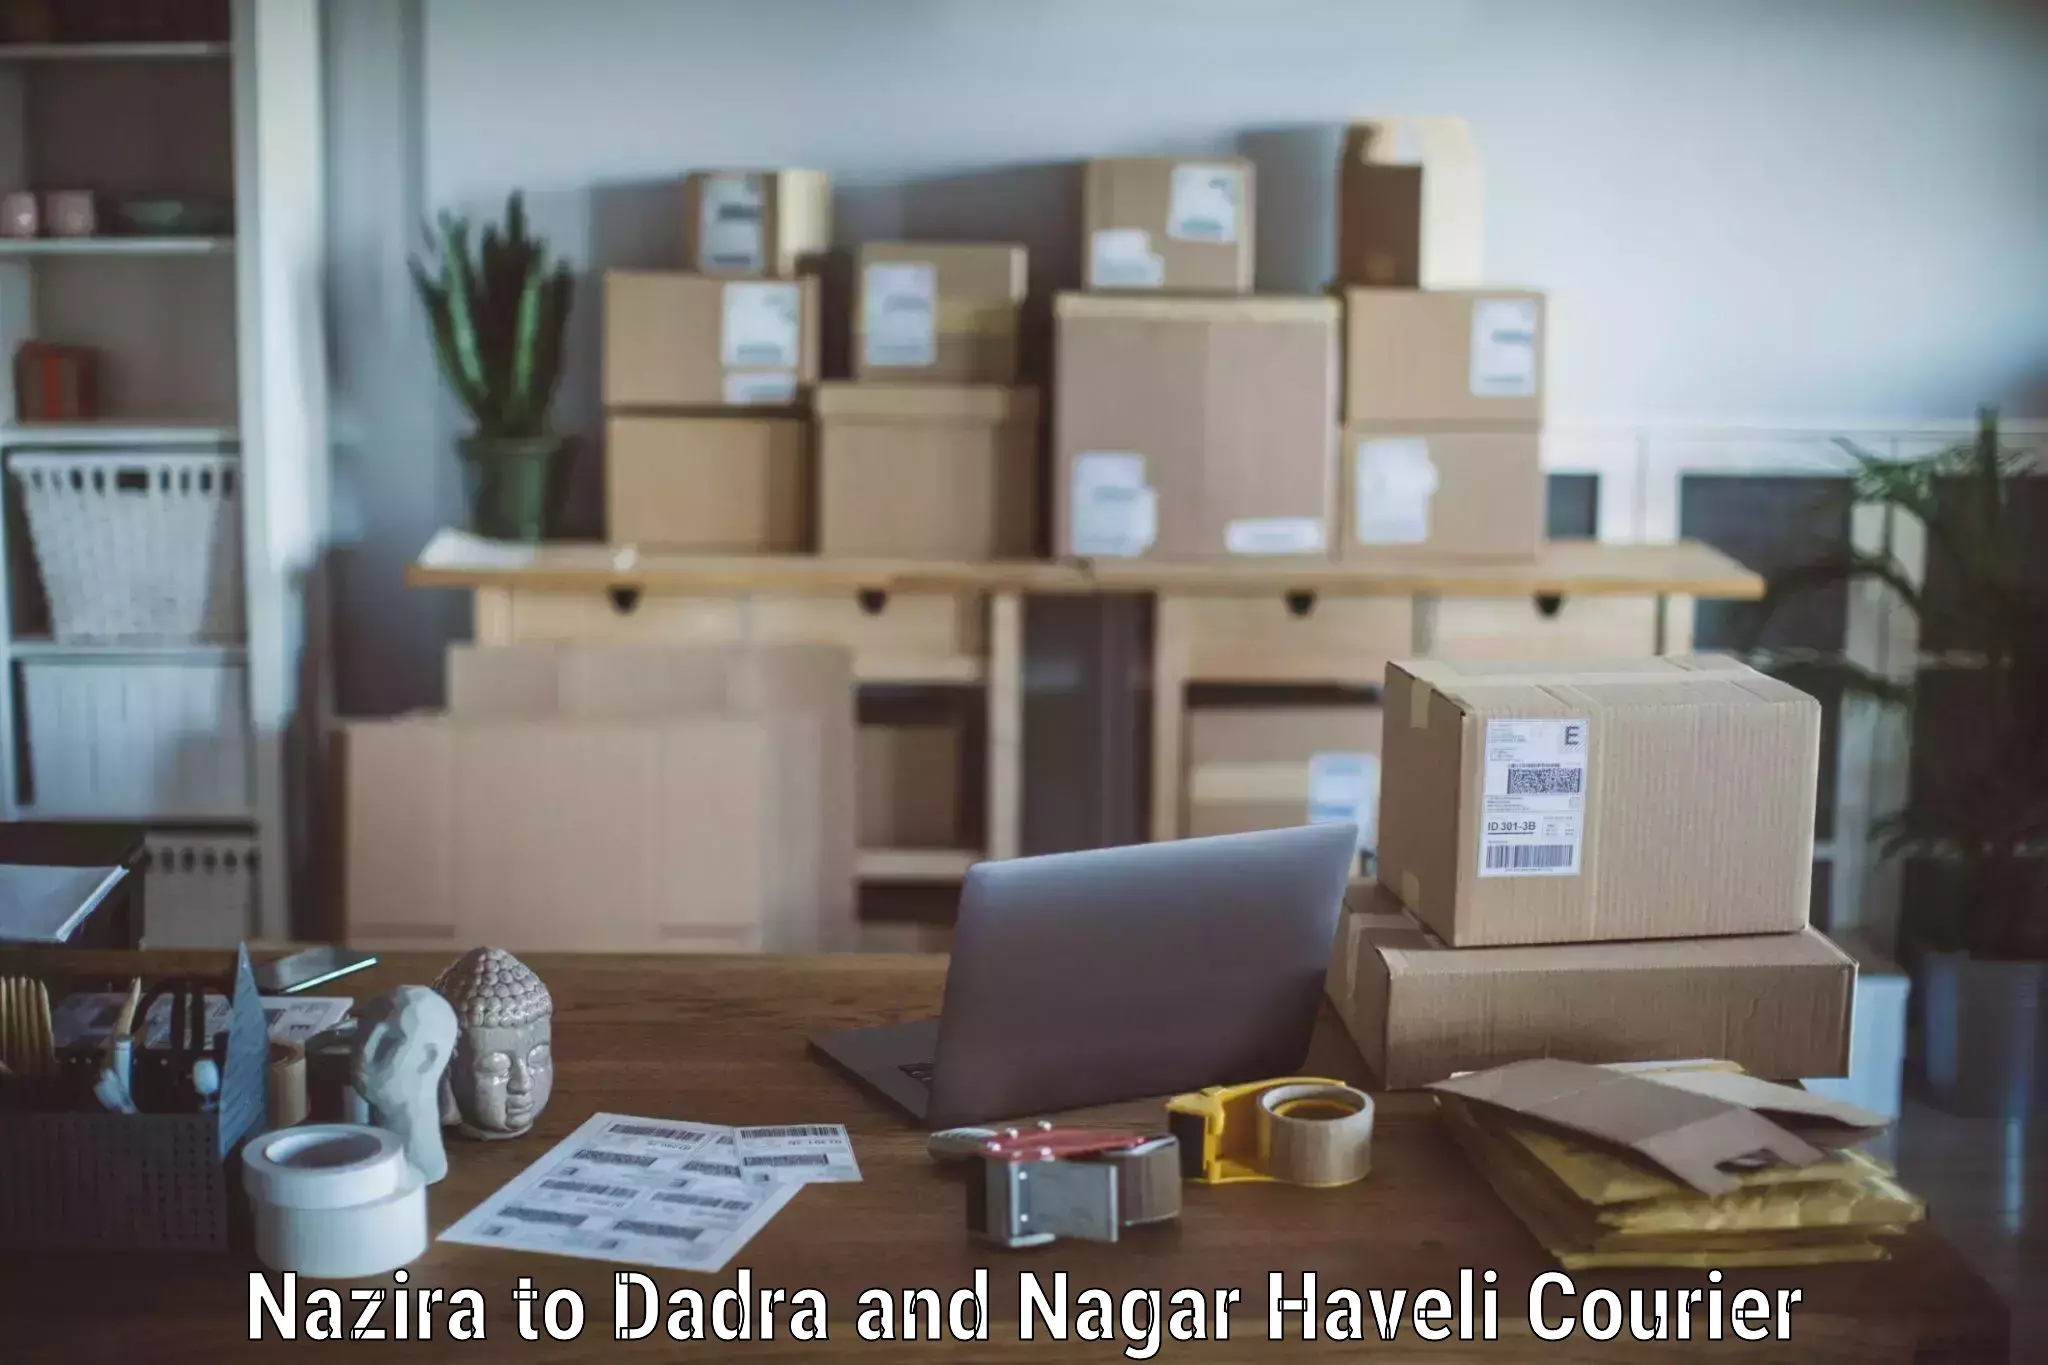 Professional movers in Nazira to Dadra and Nagar Haveli